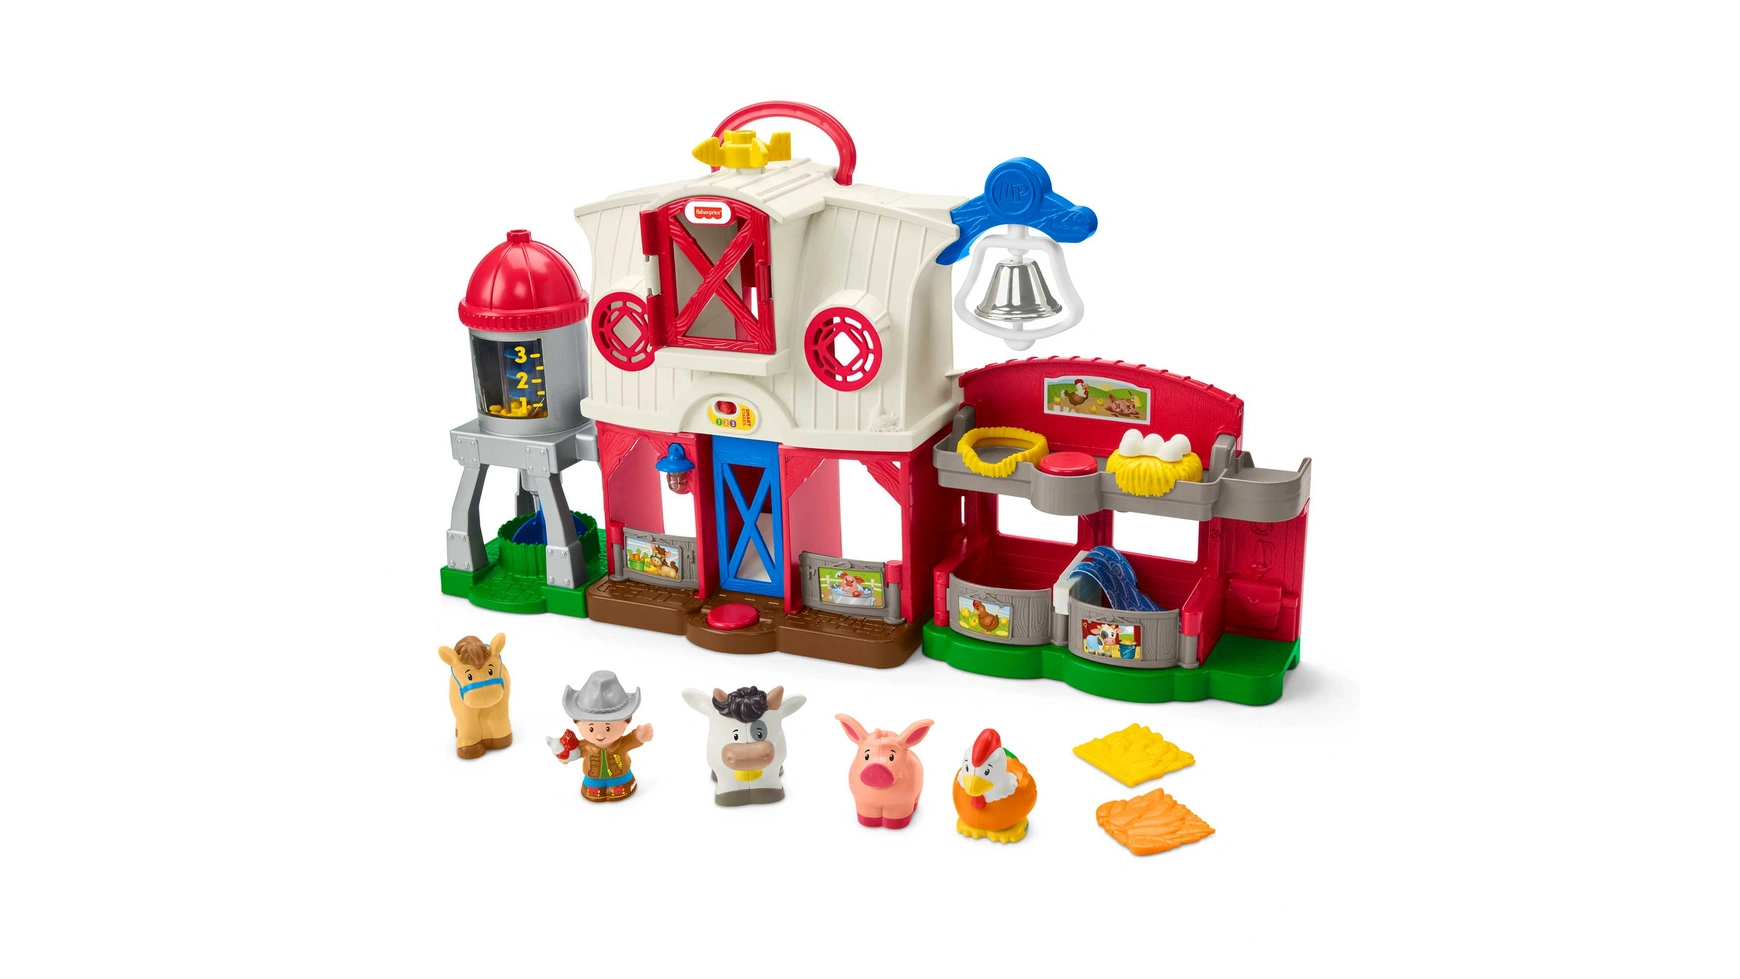 Ферма Fisher Price Little People, включая фигурки и игрушки для малышей фото